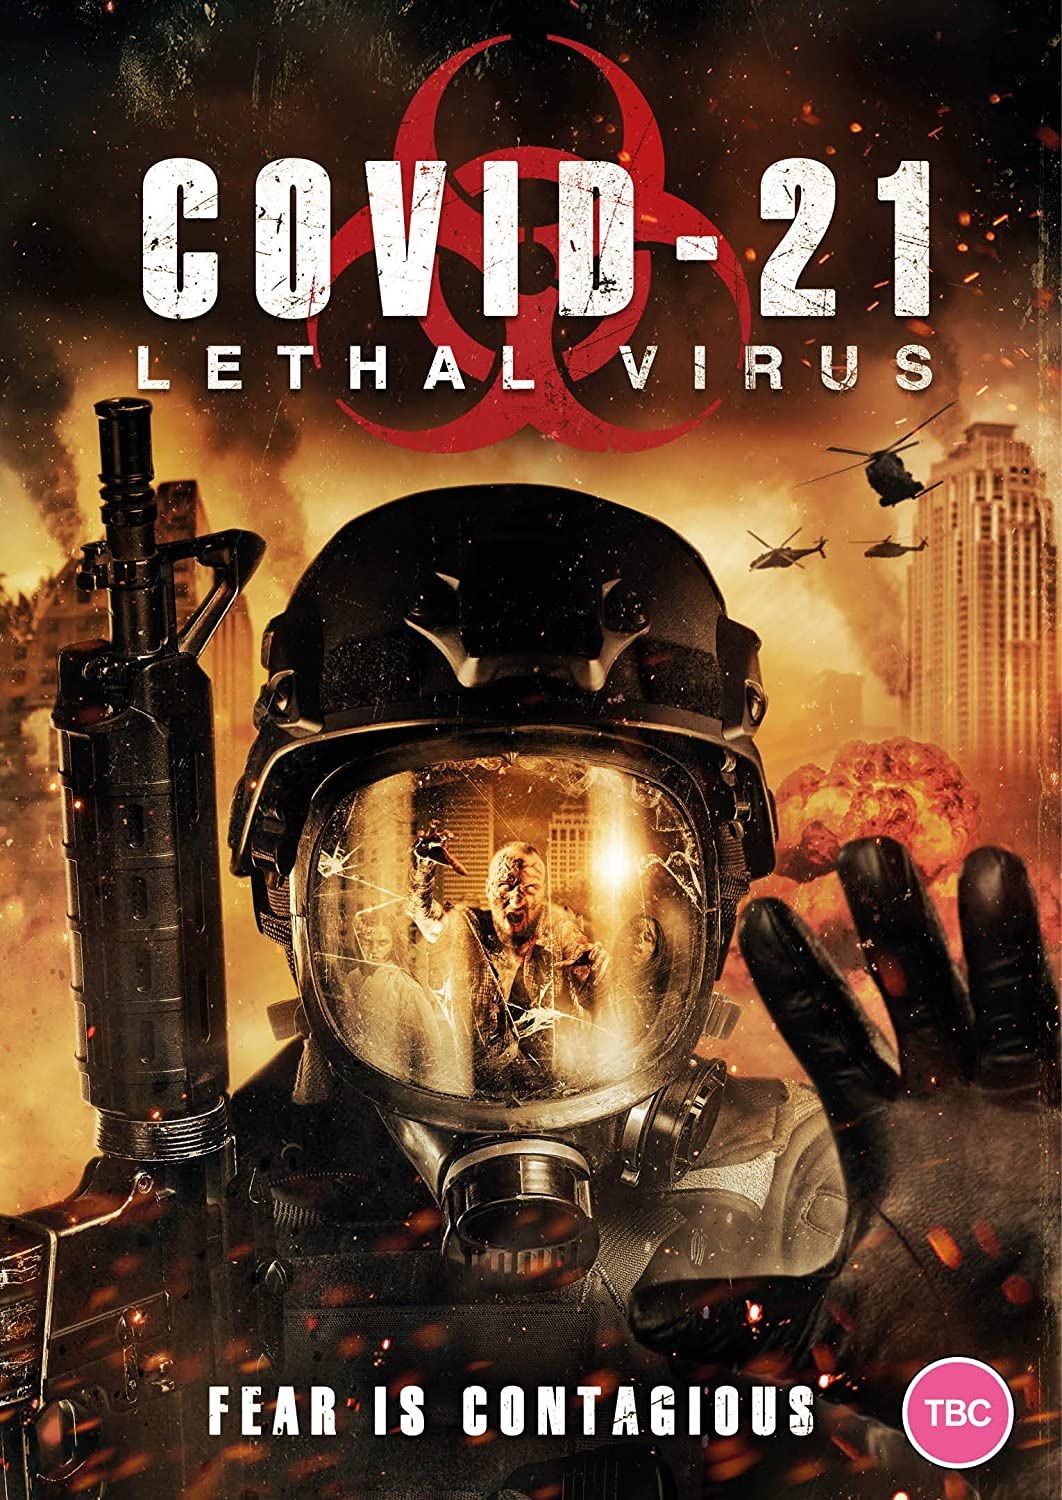 COVID-21: Lethal Virus